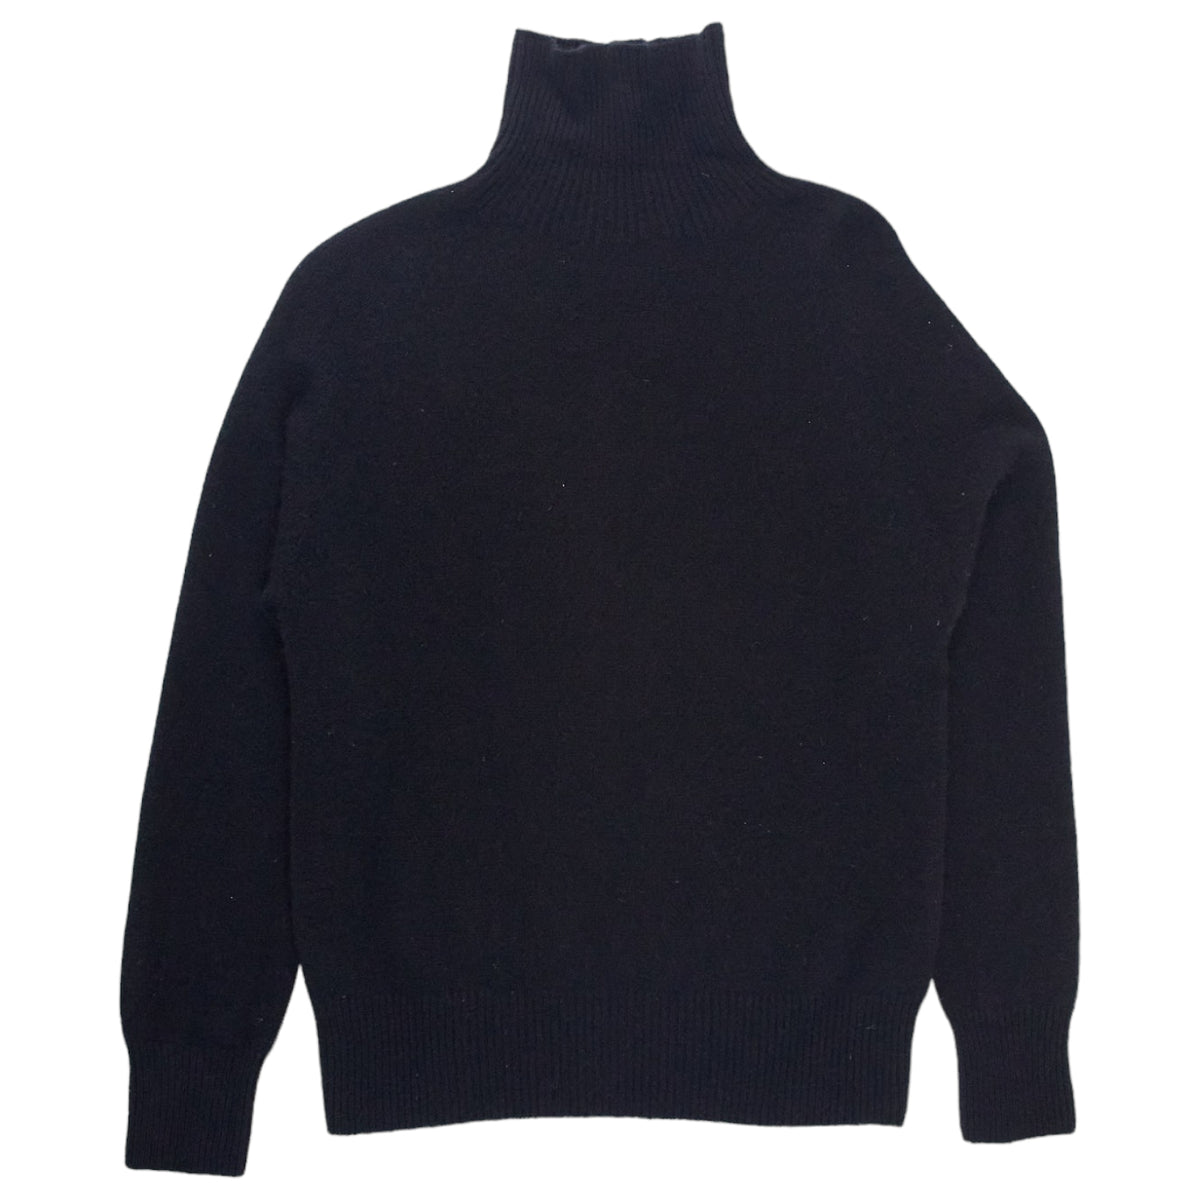 YMC Black Roll Neck Sweater